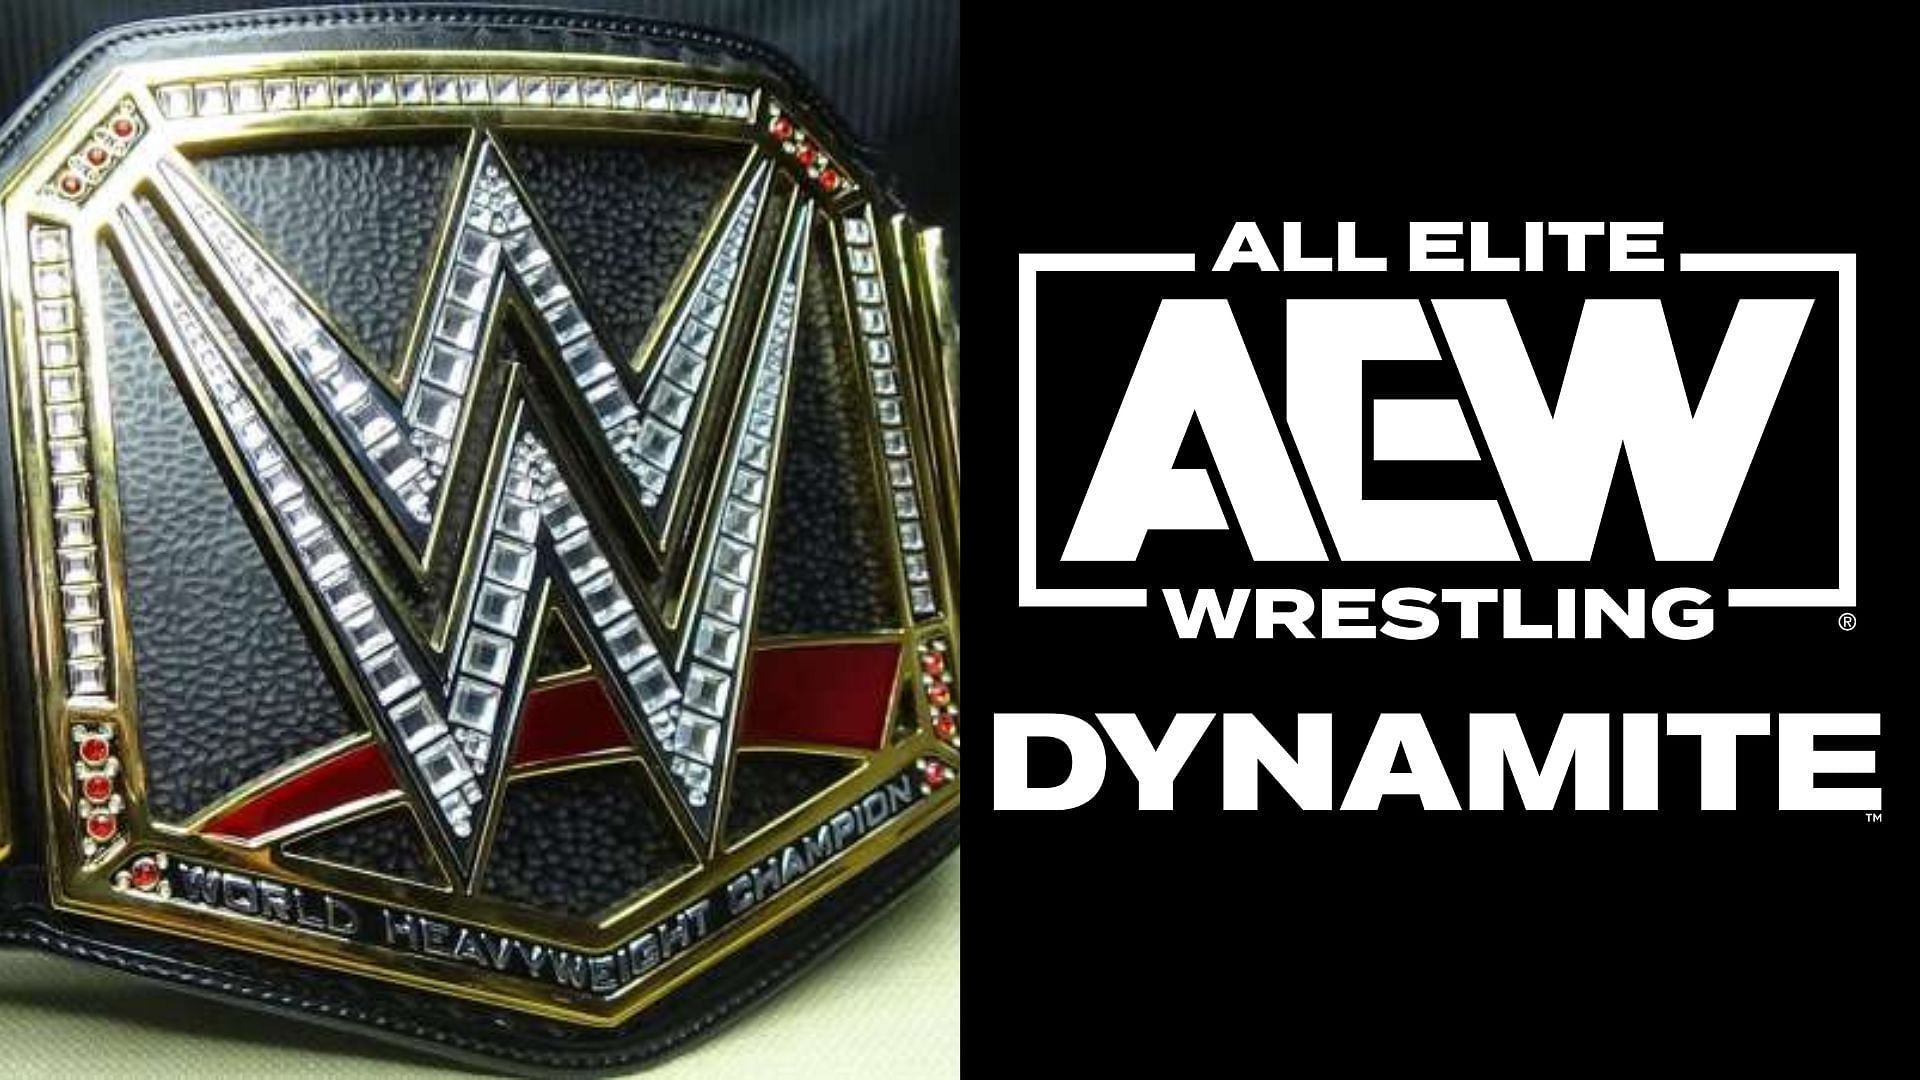 WWE Heavyweight Championship belt (left), AEW Dynamite (right)